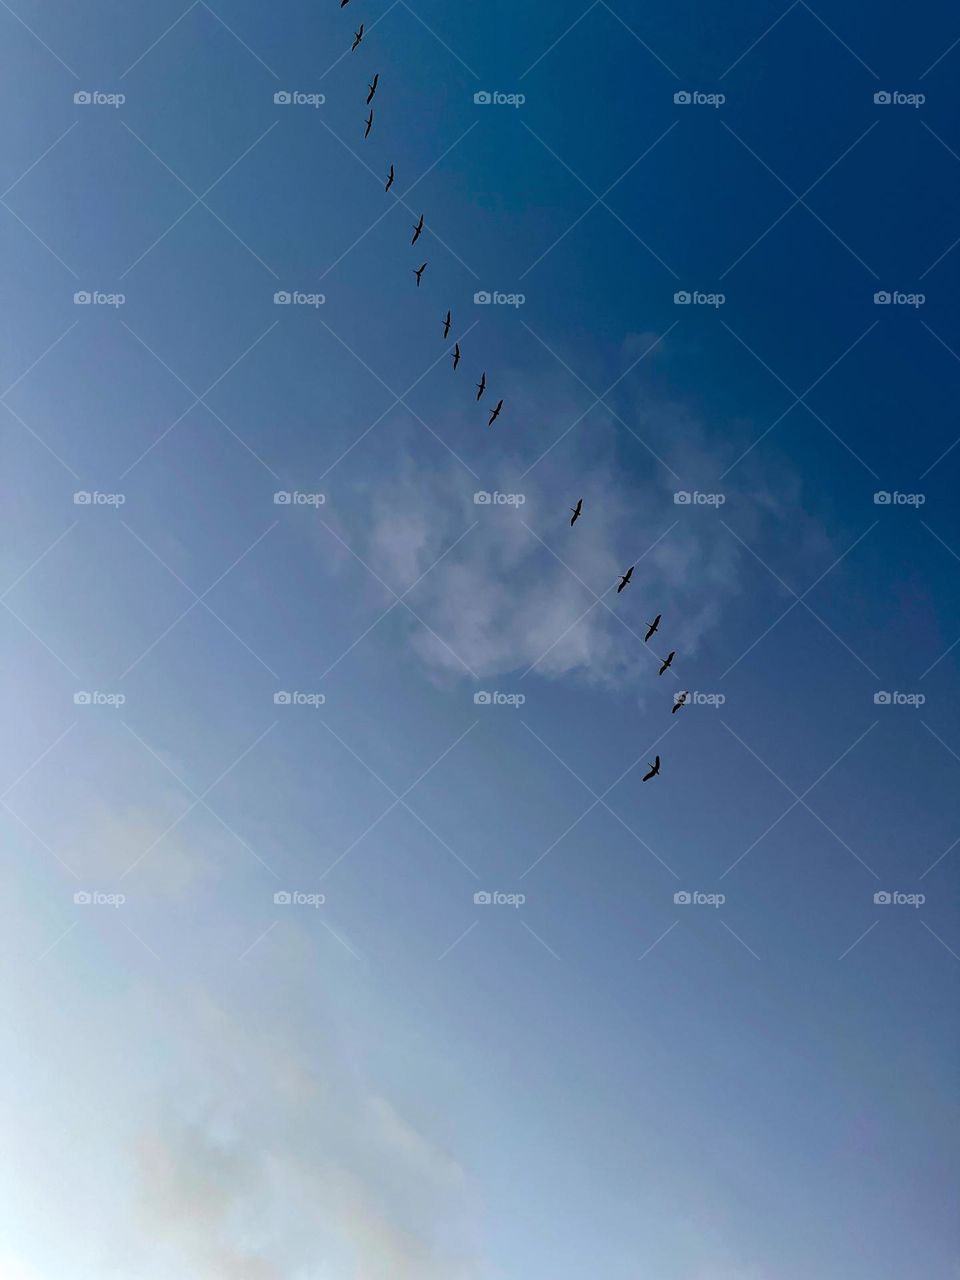 bird formation in a pretty blue sky